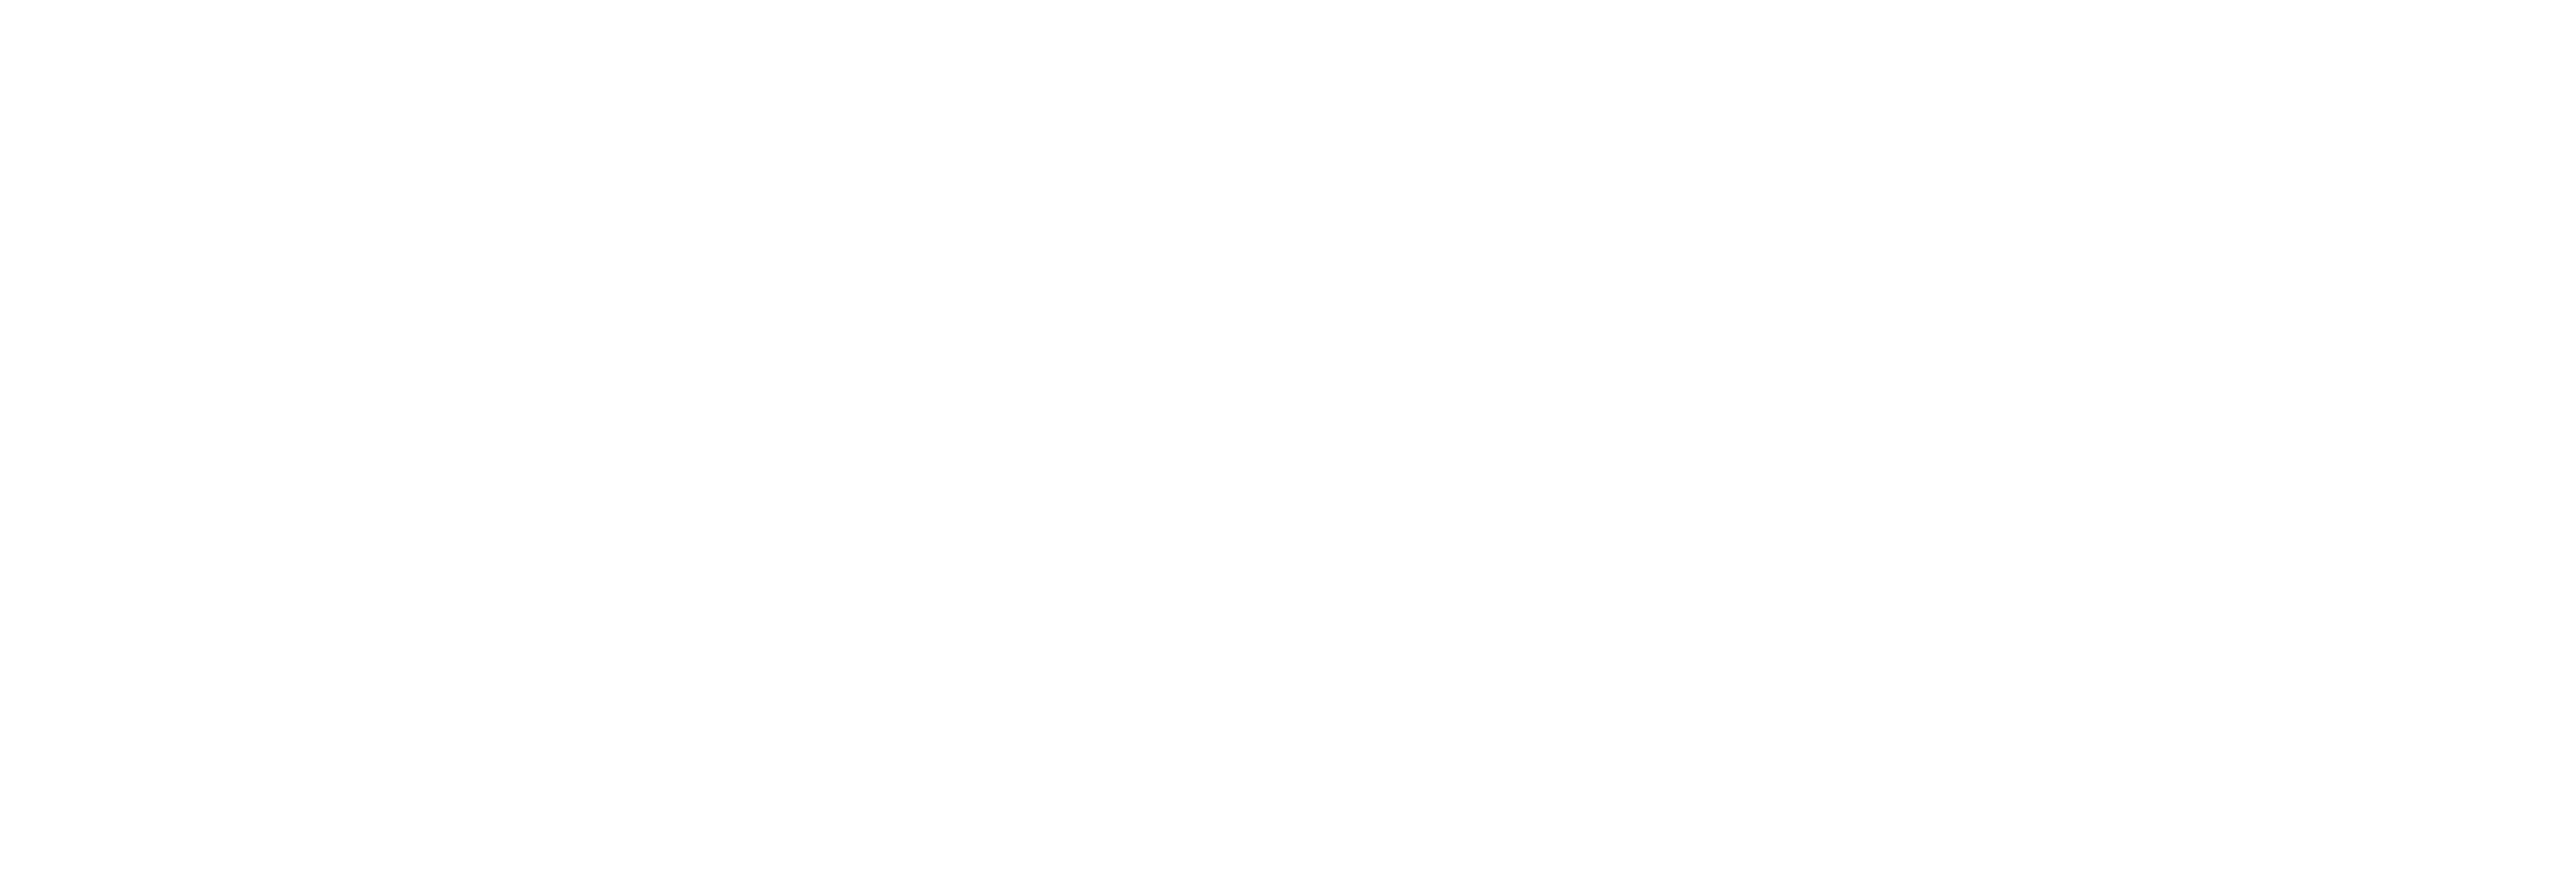 Nate Thomas Designs